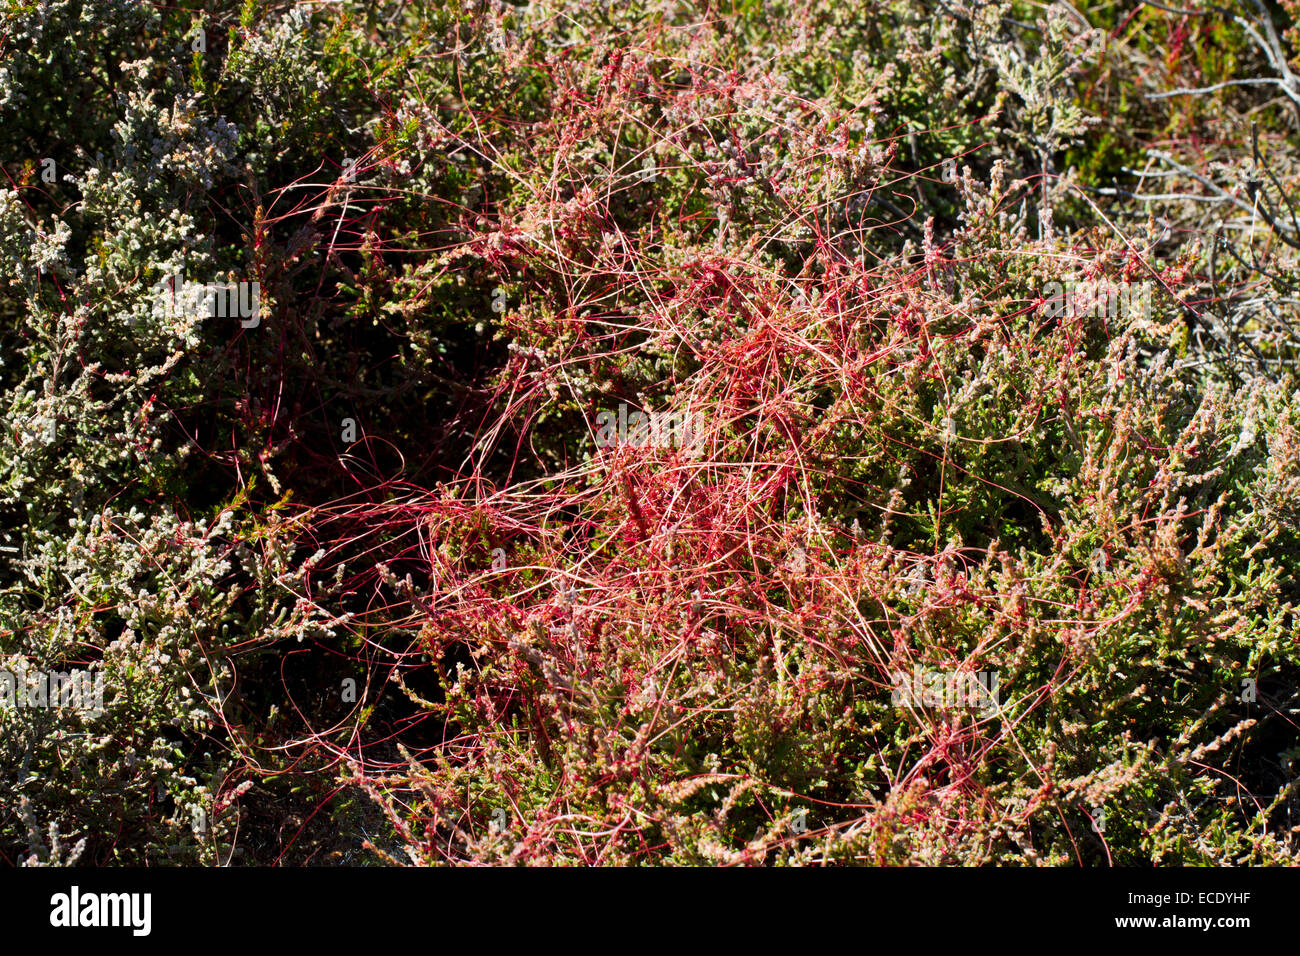 Flowering Common Dodder (Cuscuta epithymum) parasitic plant on Common Heather or Ling (Calluna vulgaris). Iping Common, Sussex. Stock Photo